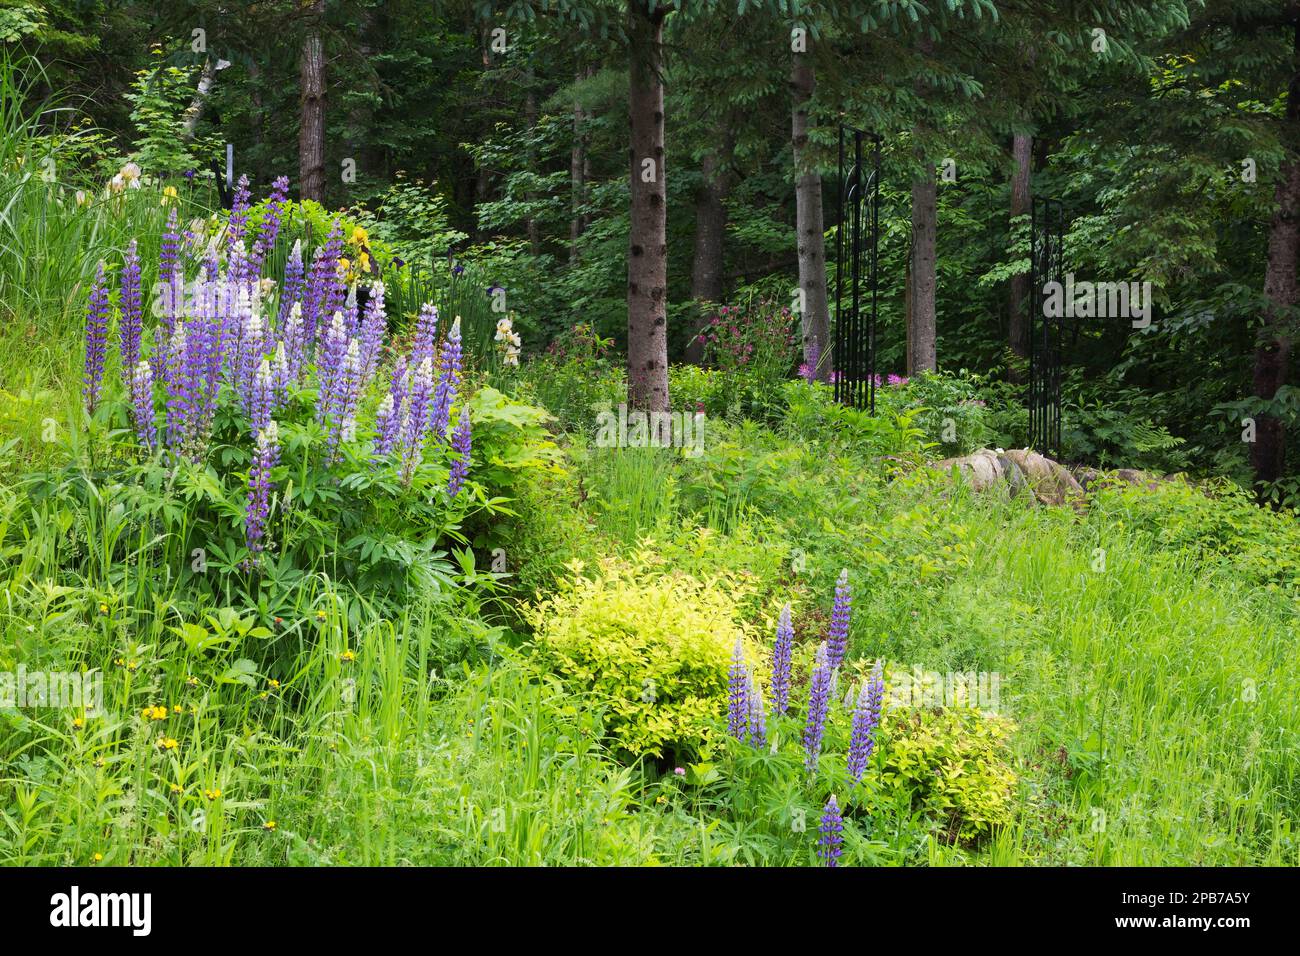 Lupinus perennis 'Perennial Blue' - Wild Lupine, Spiraea japonica - Japanese Spirea, Picea glauca - White Spruce in border in front yard garden. Stock Photo